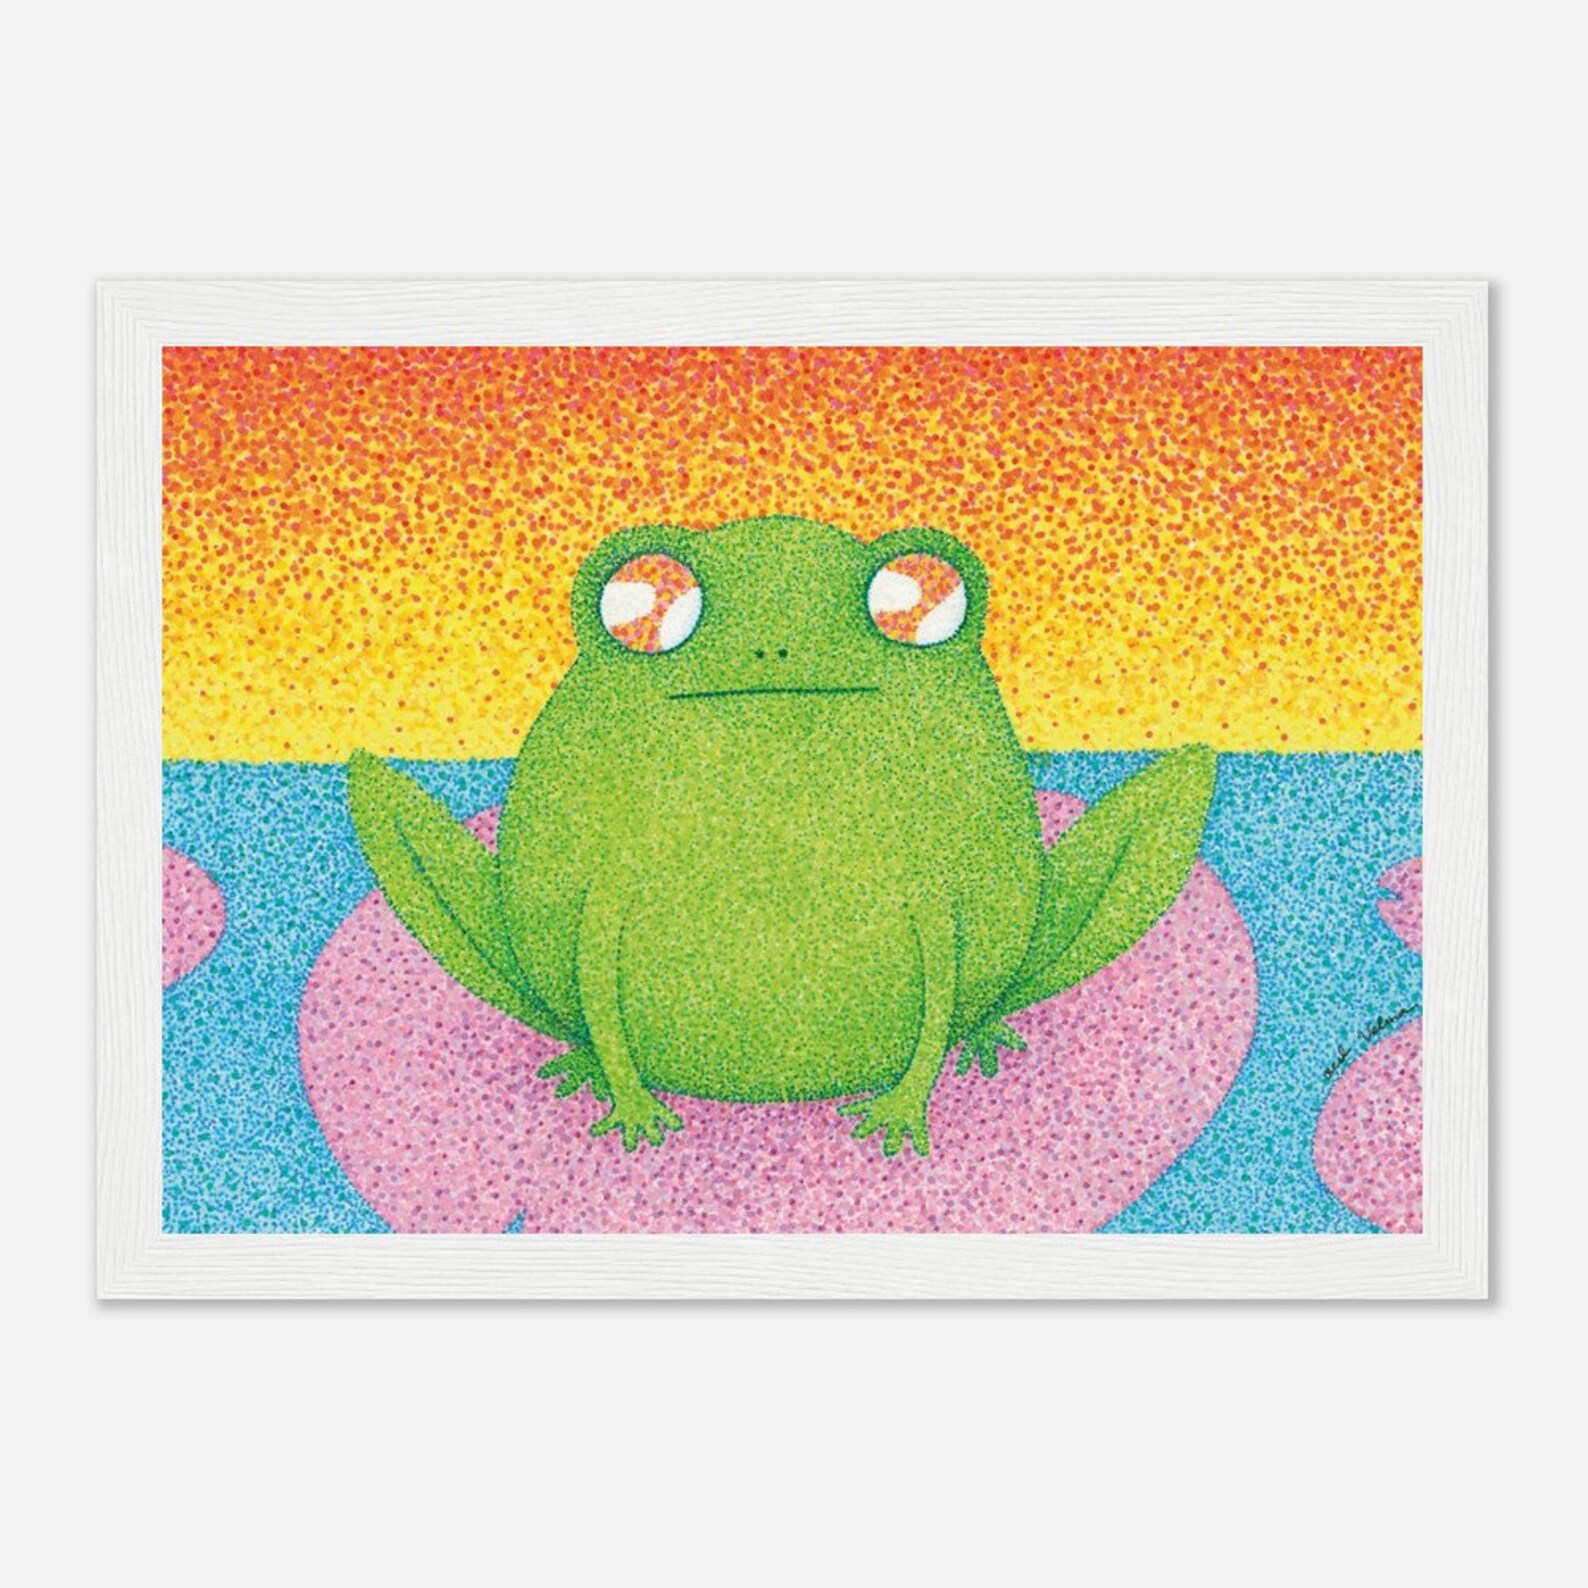 Meditating Frog at Sunset